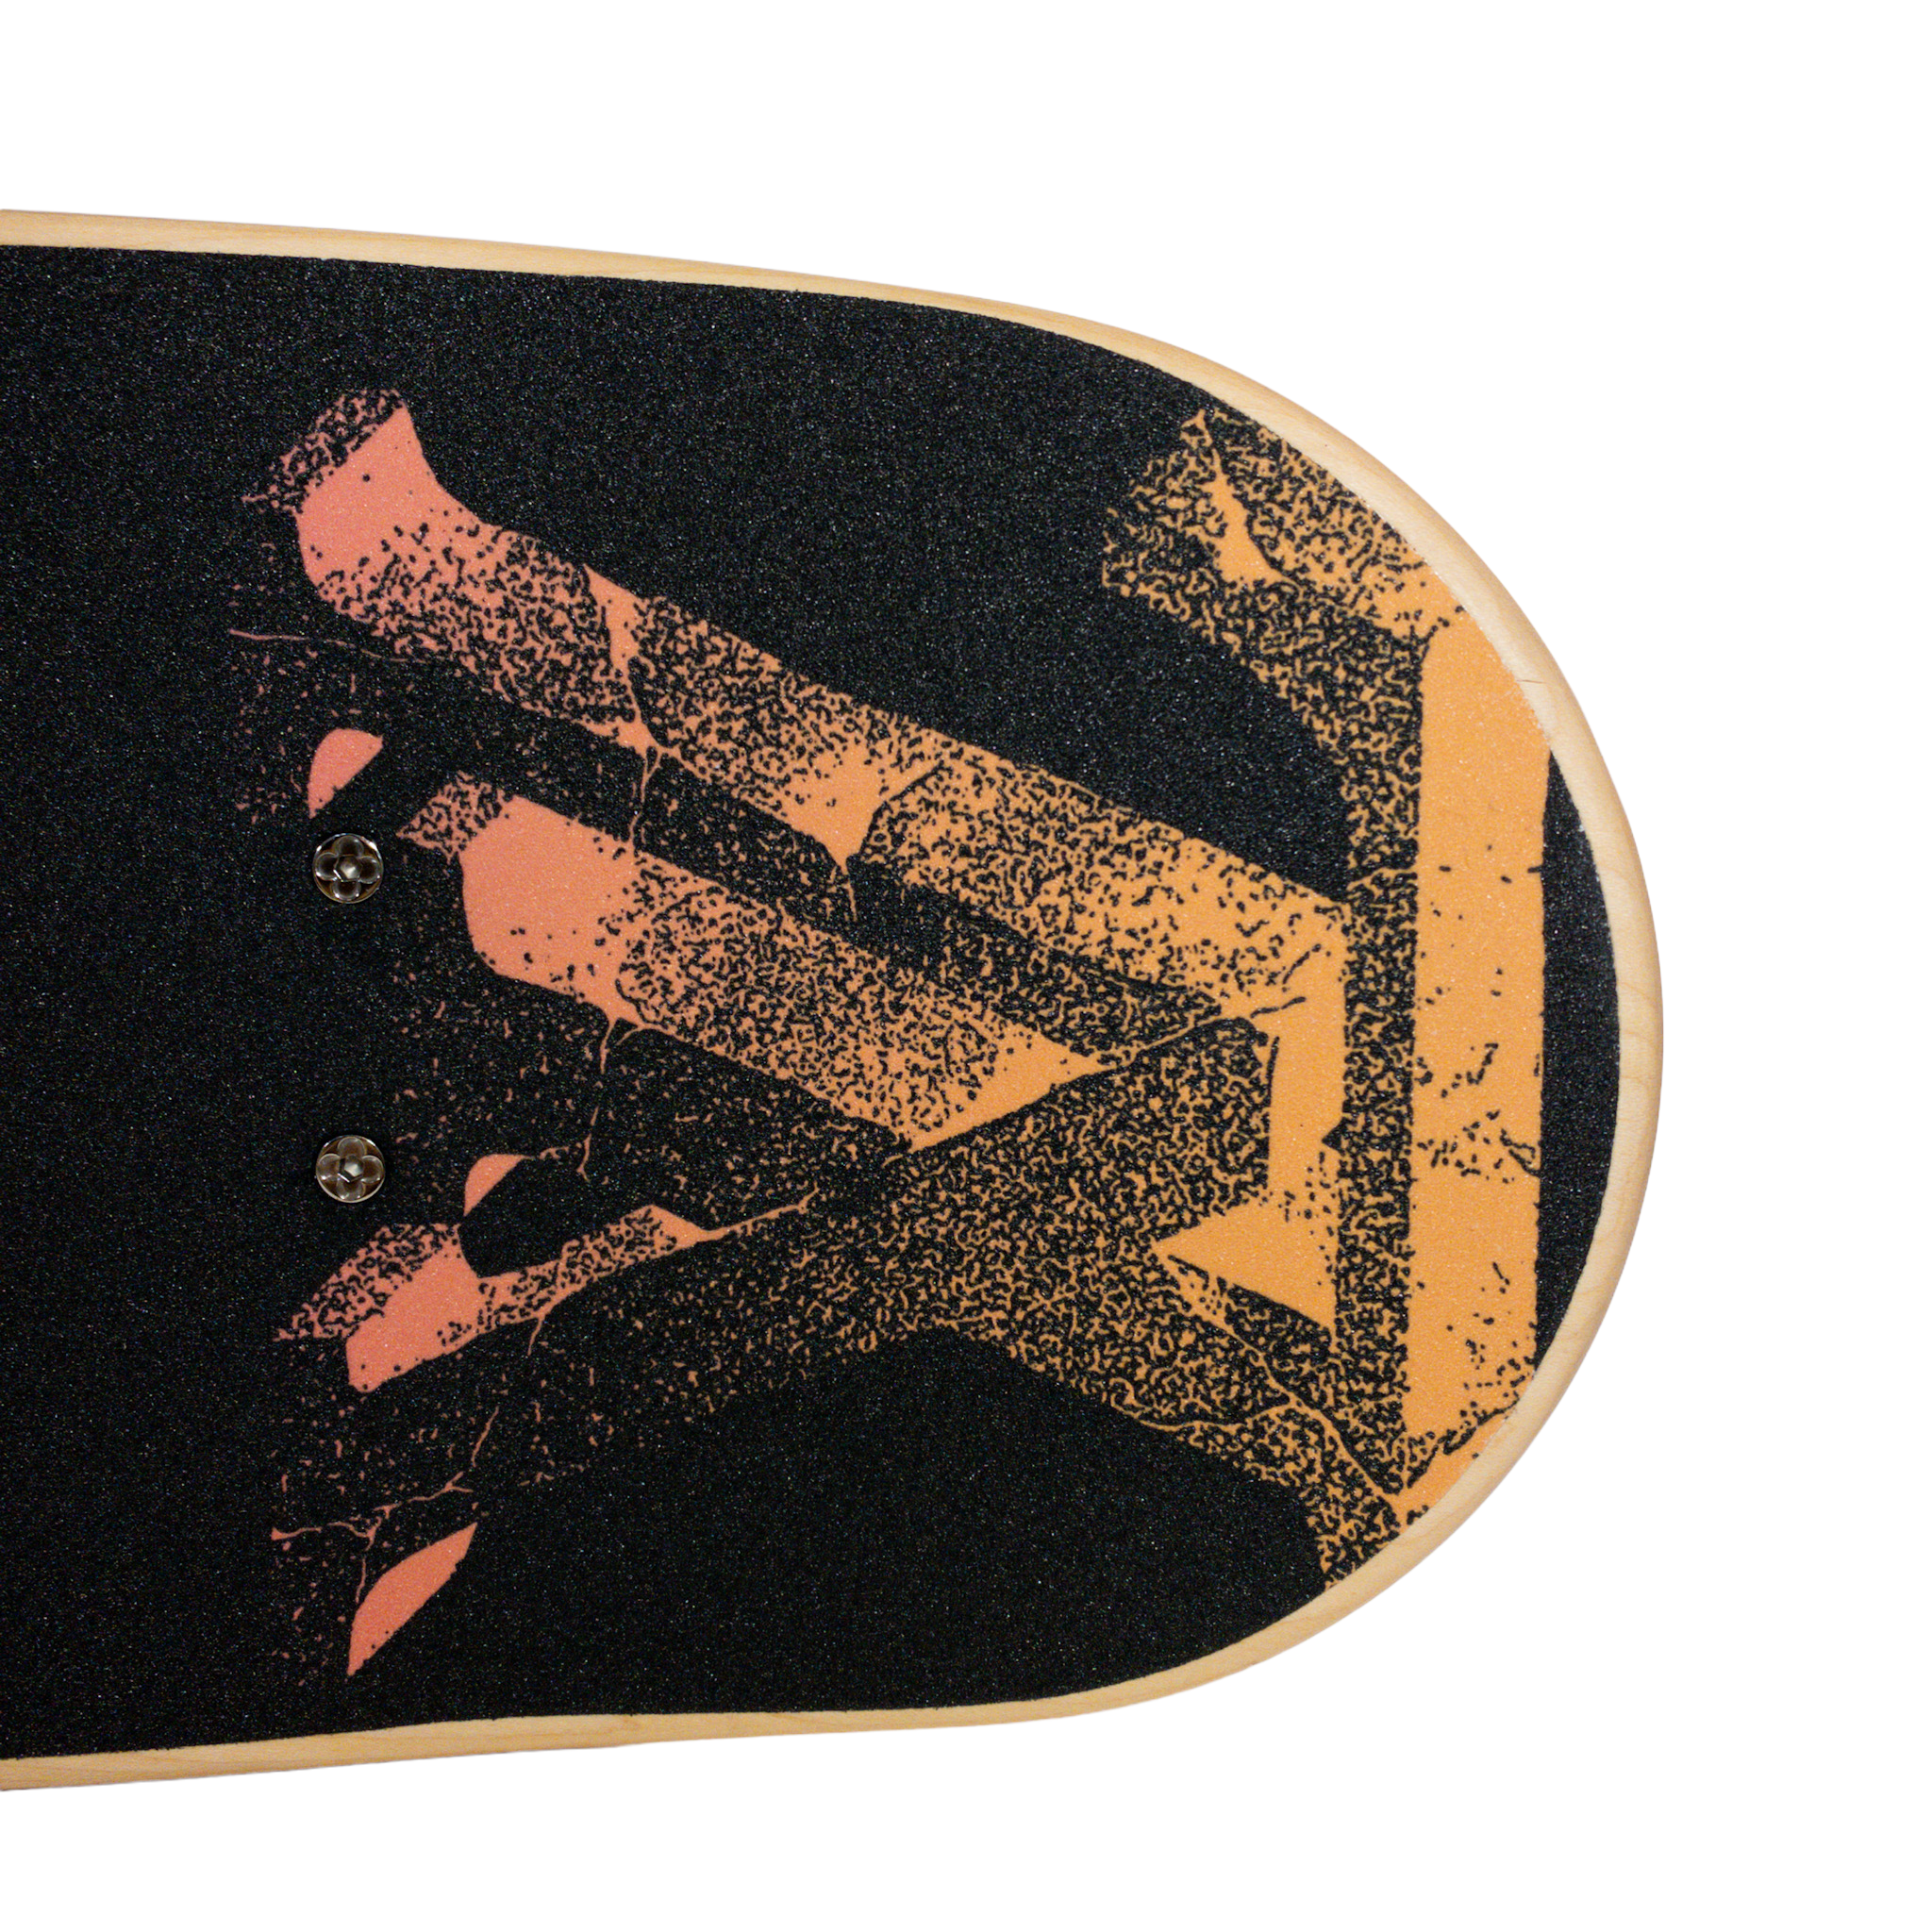 Virgil Abloh's stunning Louis Vuitton skateboard set costs nearly $60,000